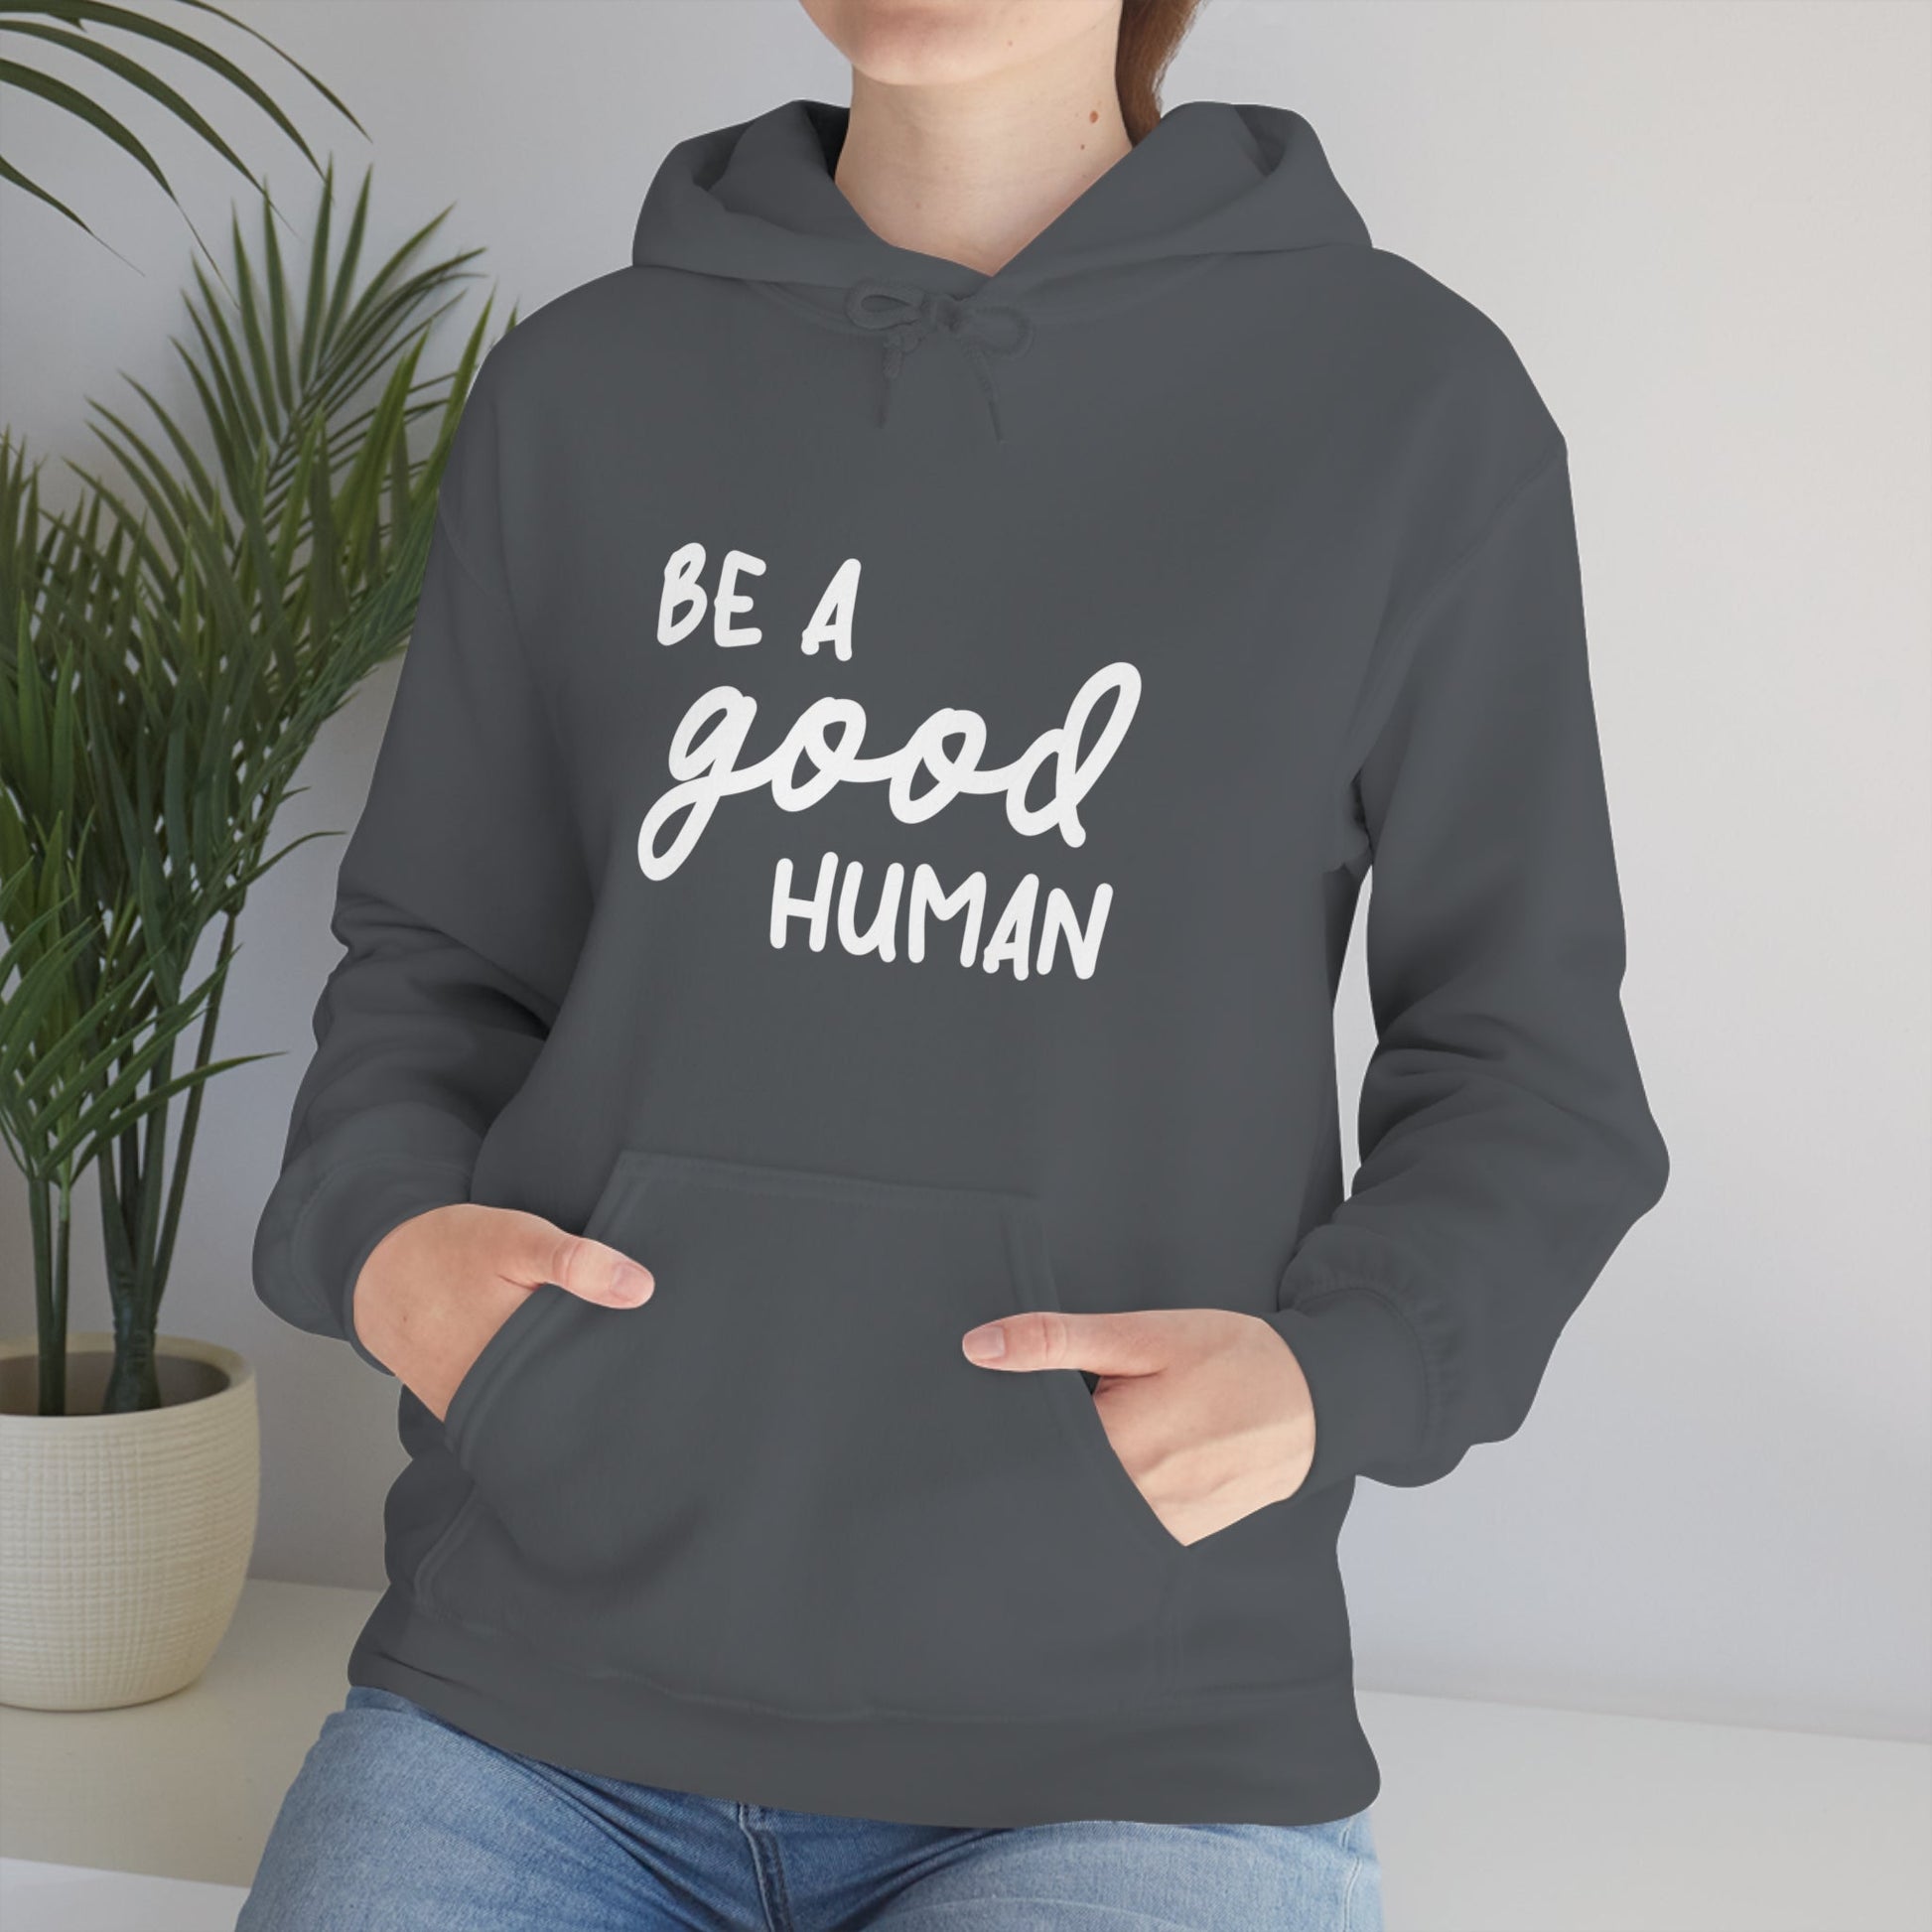 Be A Good Human | Hooded Sweatshirt - Detezi Designs-41310476804728920992